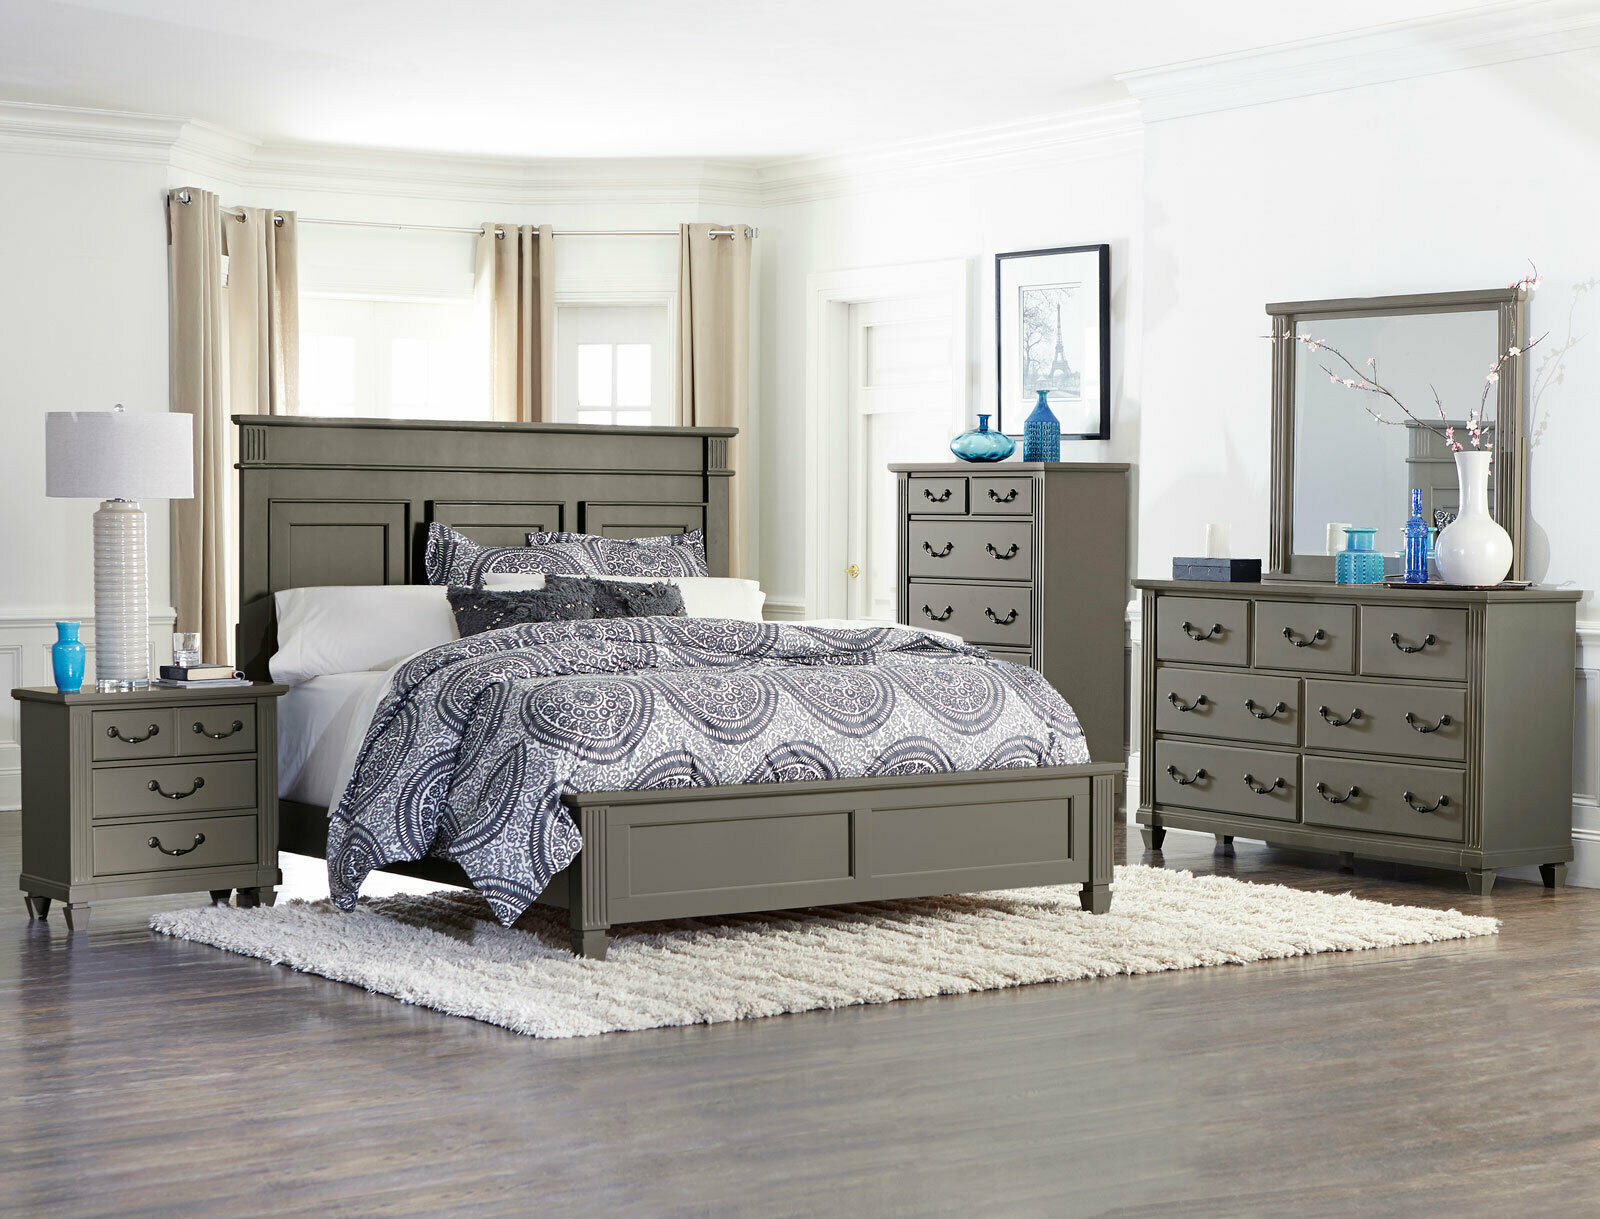 King Size Master Bedroom Sets
 Traditional Gray Wood Master Bedroom Suite Furniture